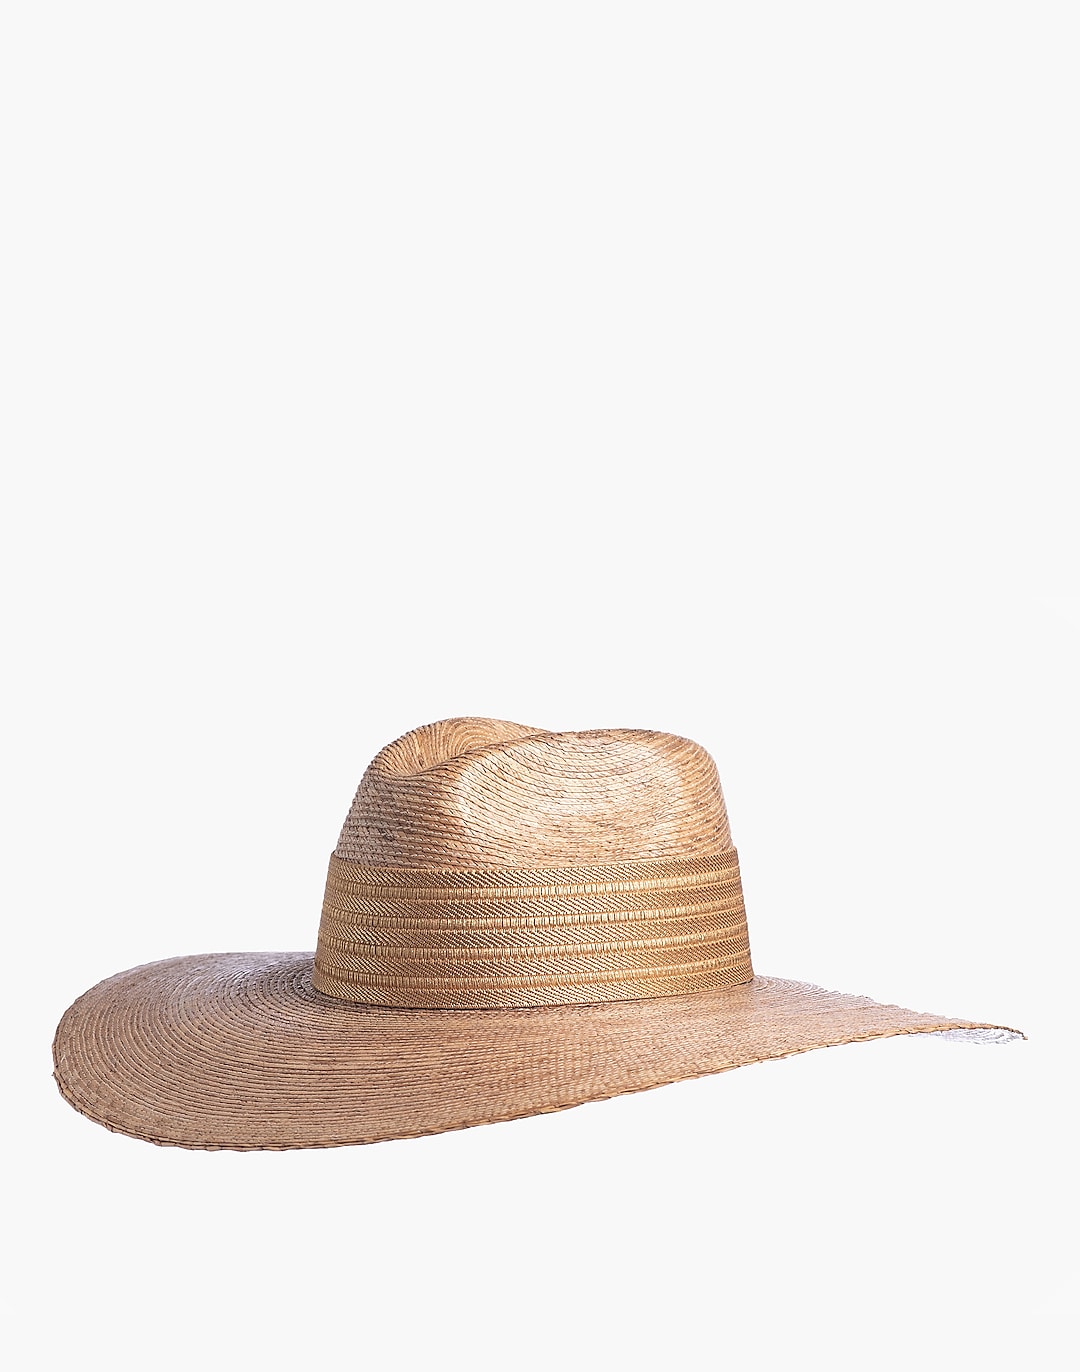 ASN Straw Goldie Wide-Brimmed Hat | Madewell